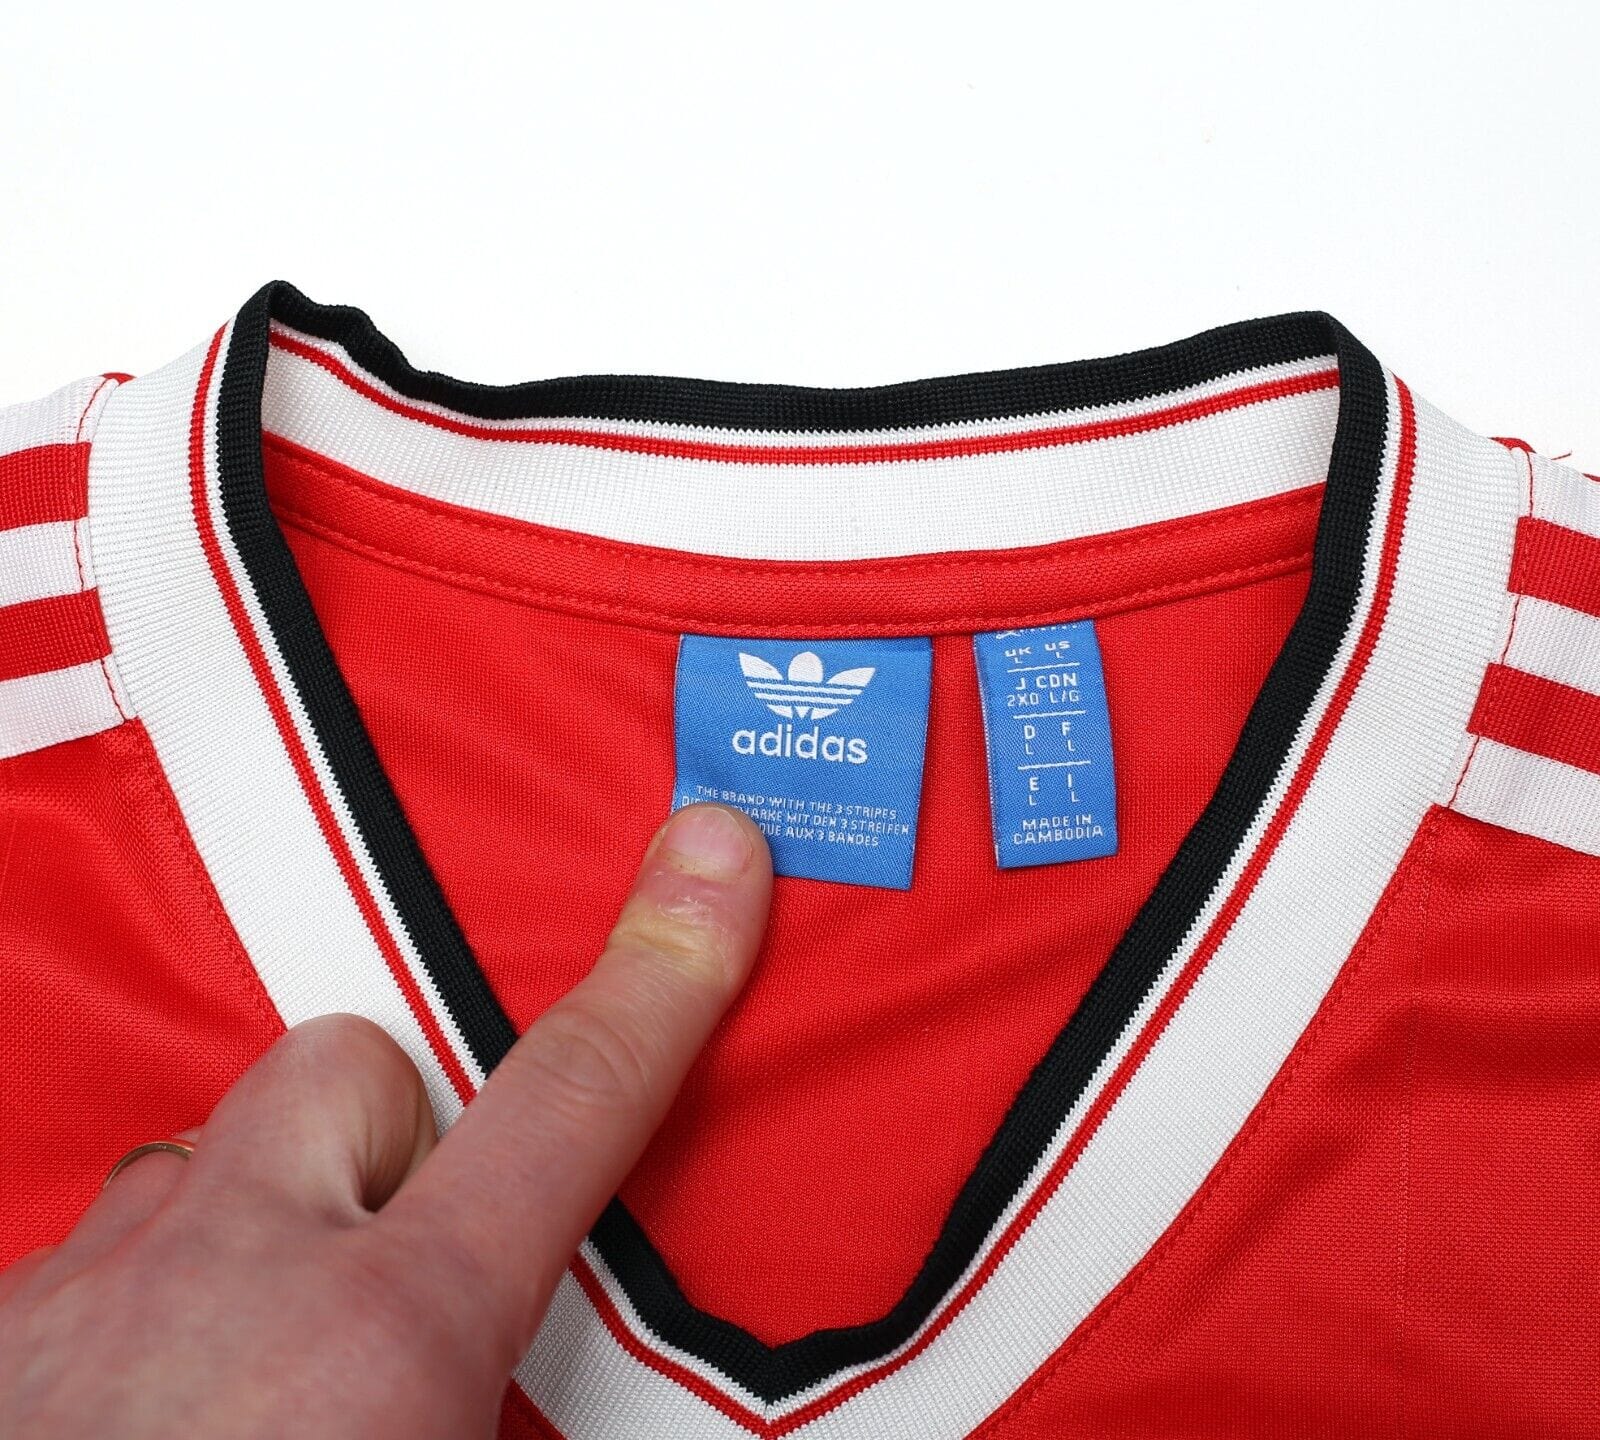 1983/84 ROBSON #7 Manchester United Home adidas Originals Football Shirt (M/L)